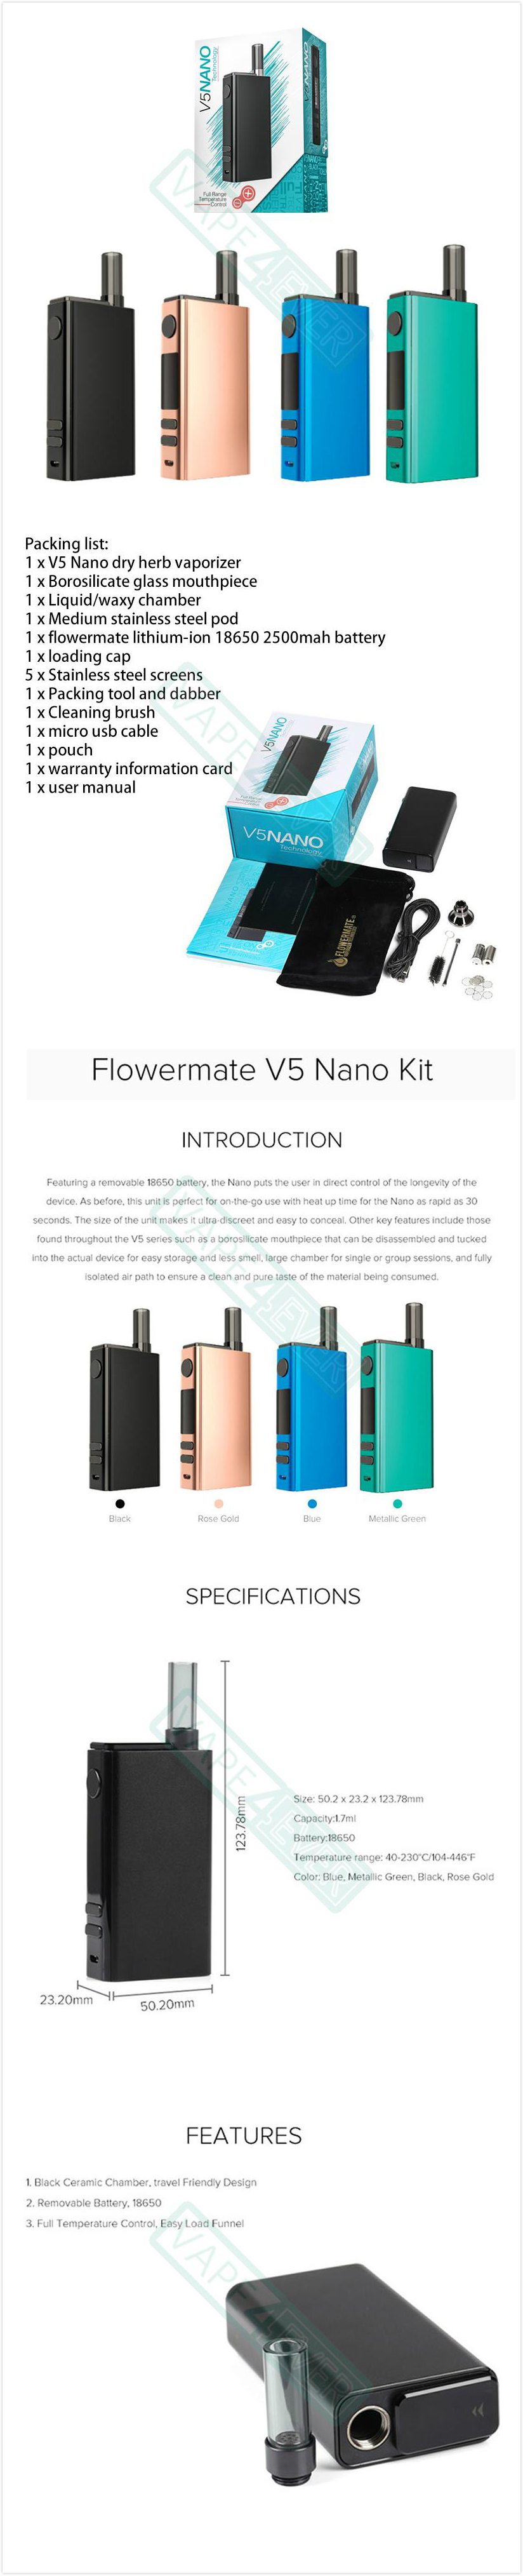 Flowermate V5 Nano 2500mAh Dry Herb Vaporizer Kit With Liquid/Wax Chamber Instruction